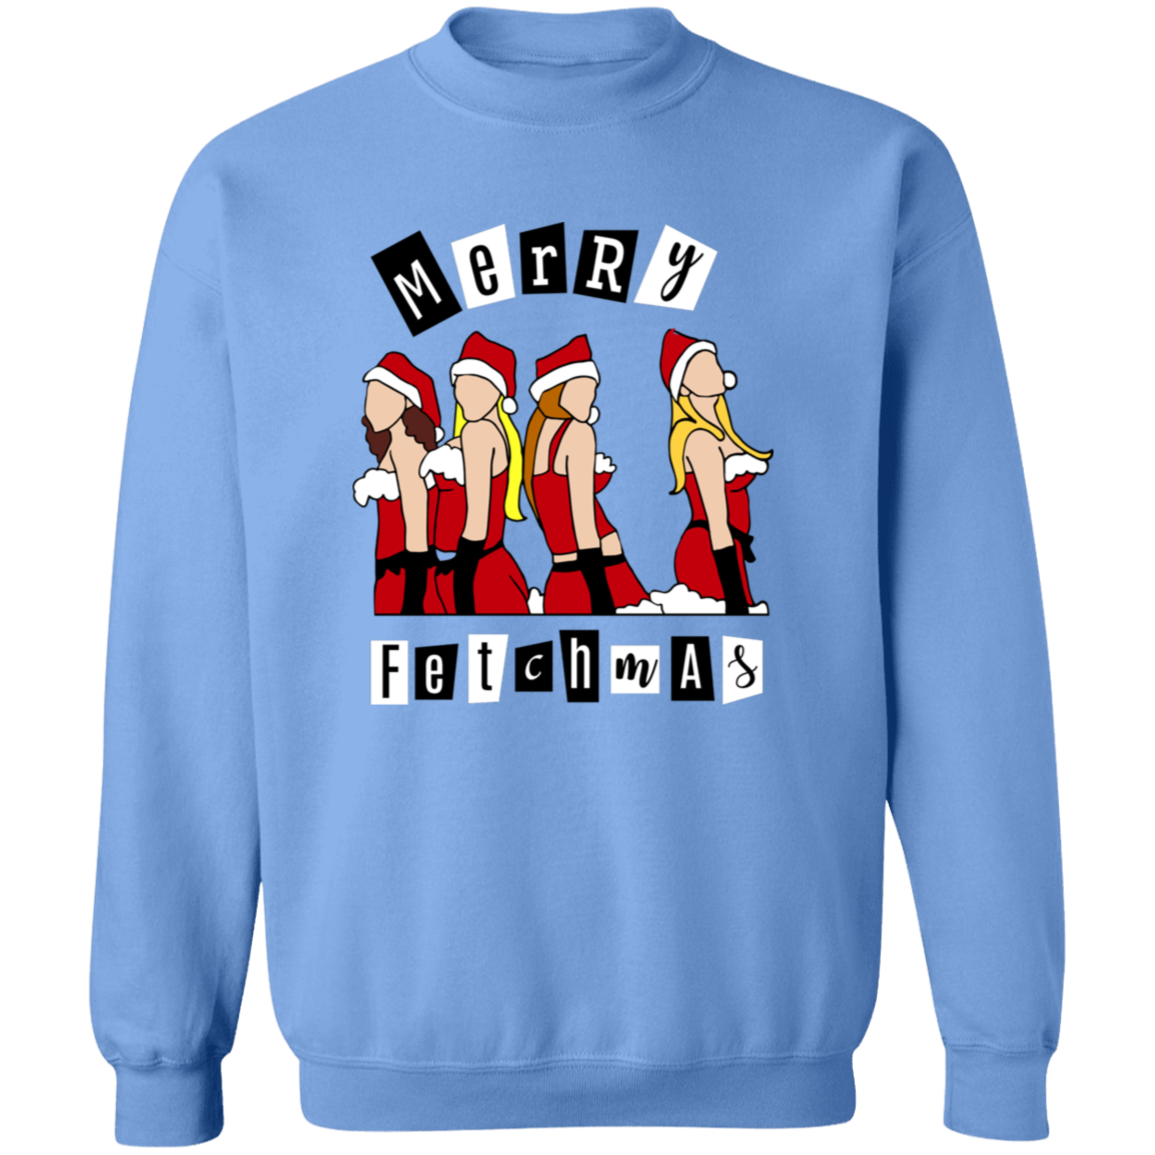 Merry Fetchmas Sweatshirt